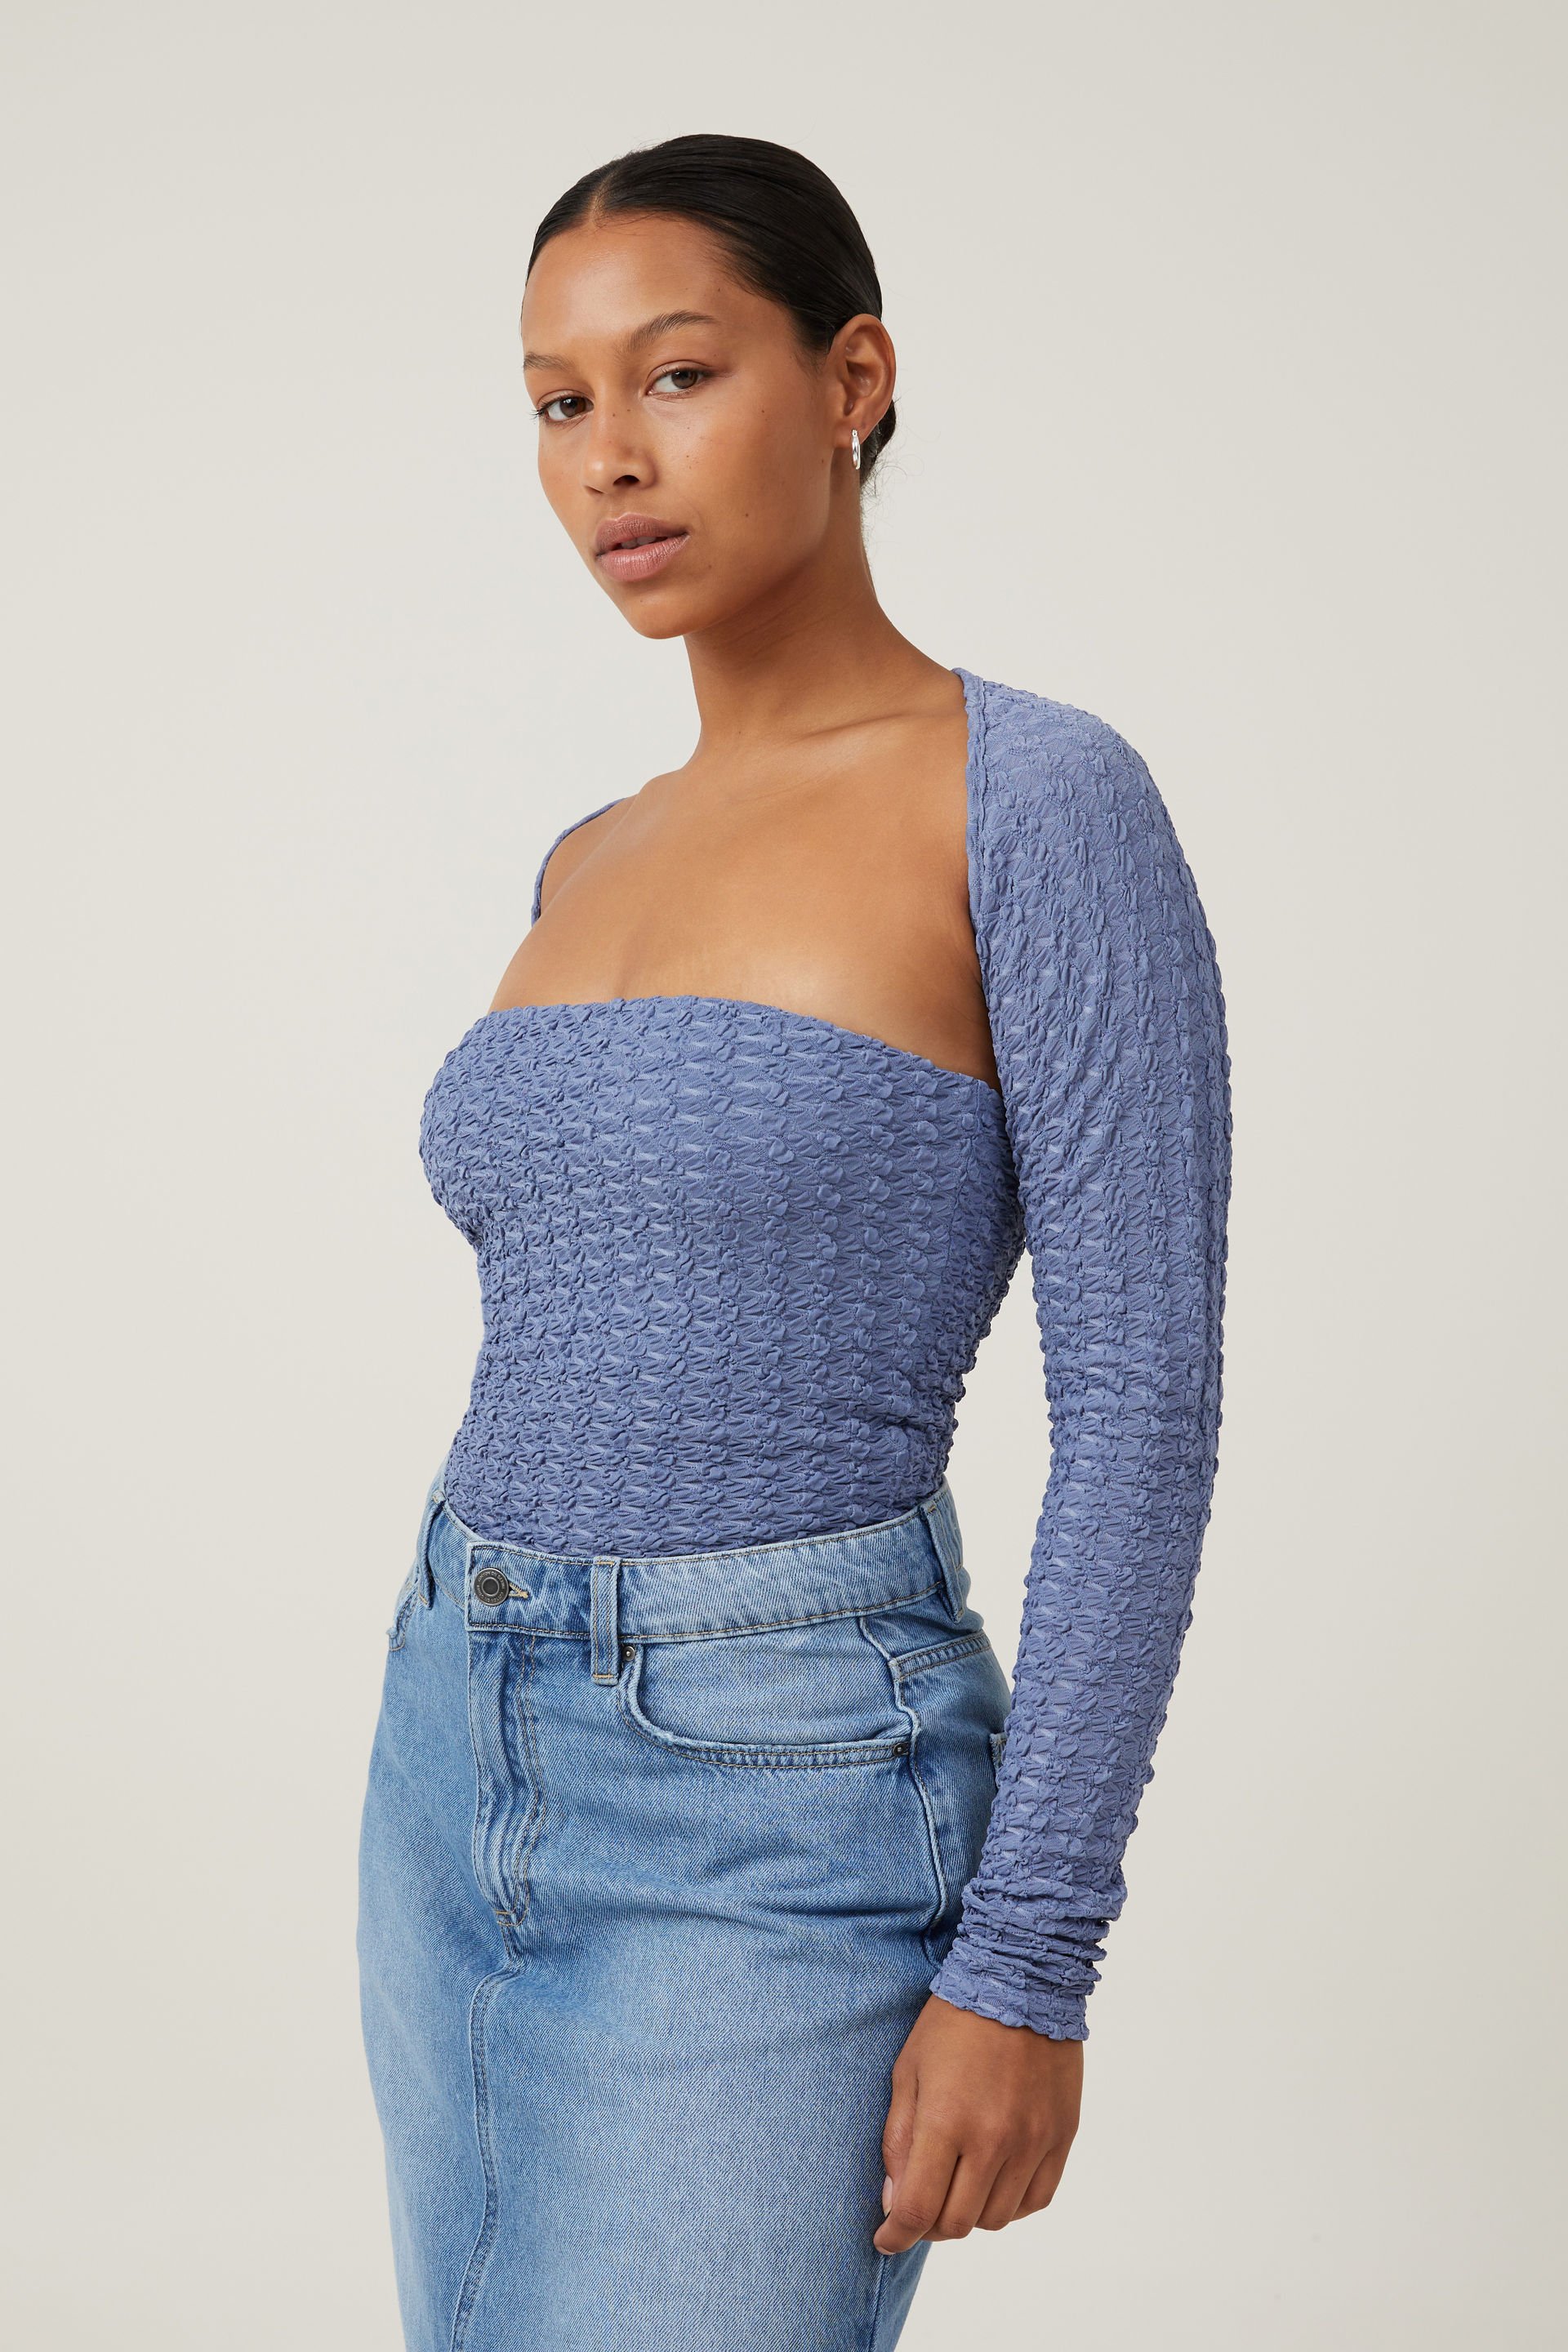 Cotton On Women - Nova Textured Long Sleeve Shrug - Elemental blue